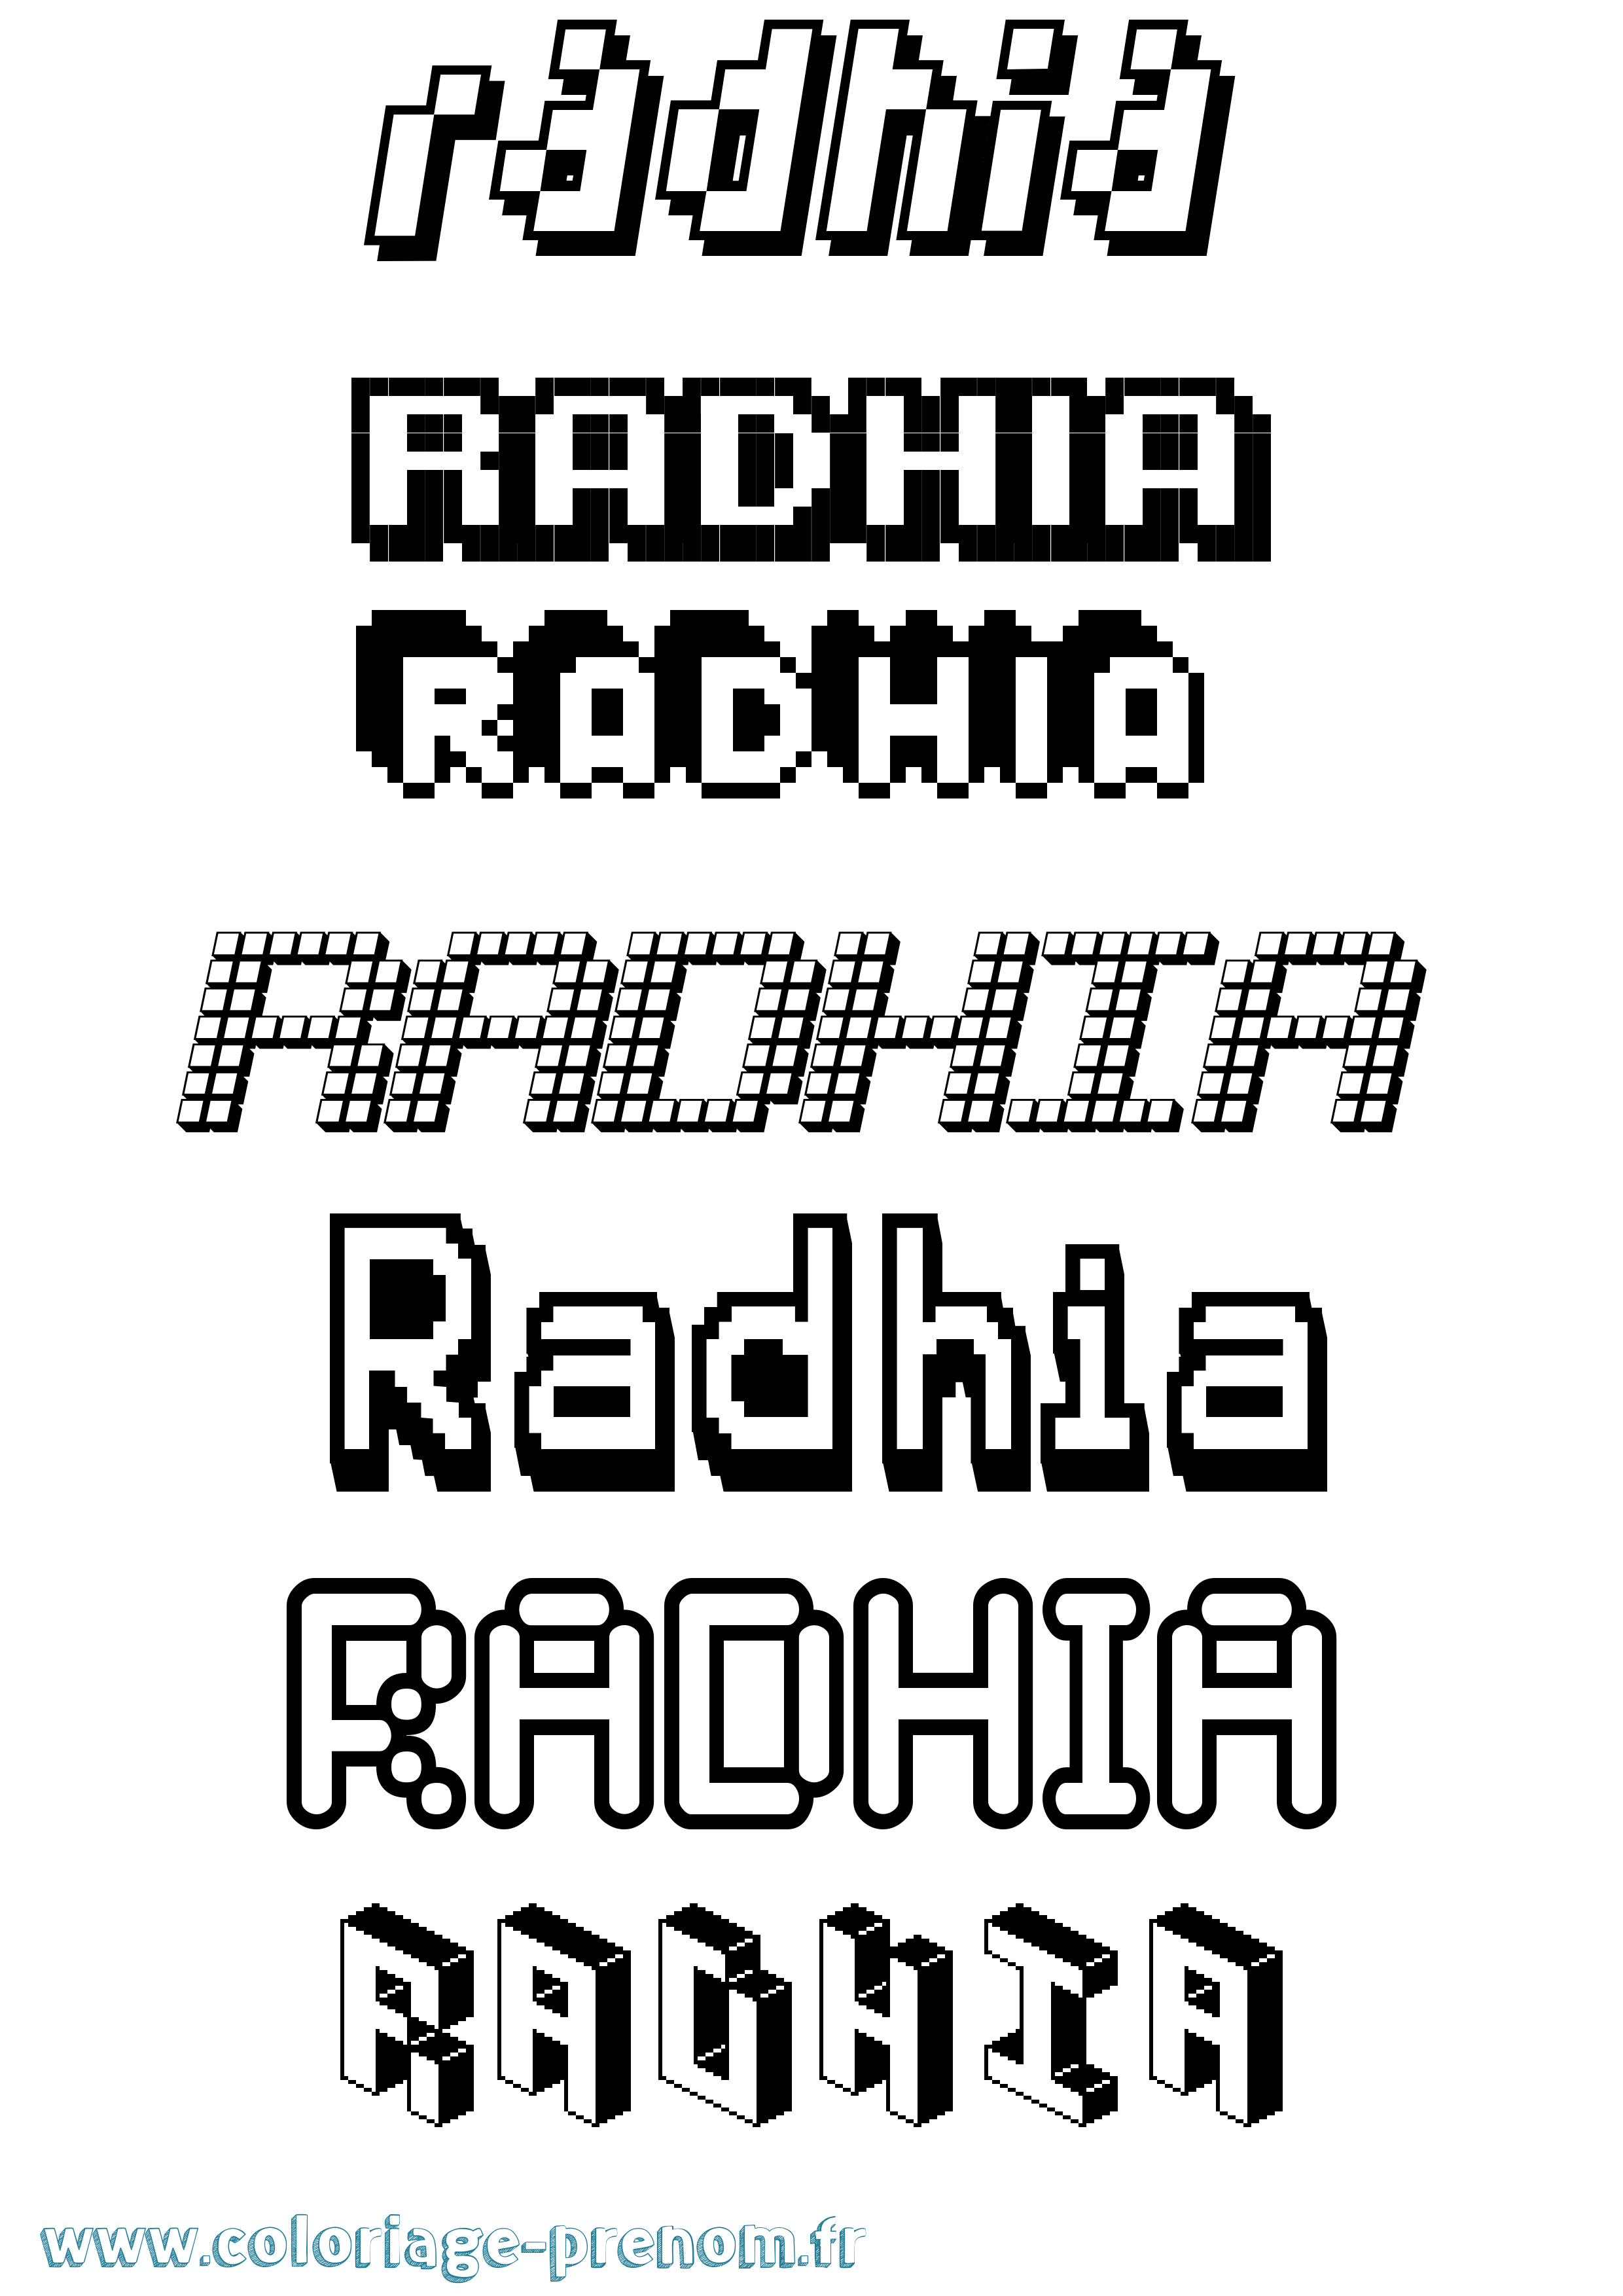 Coloriage prénom Radhia Pixel